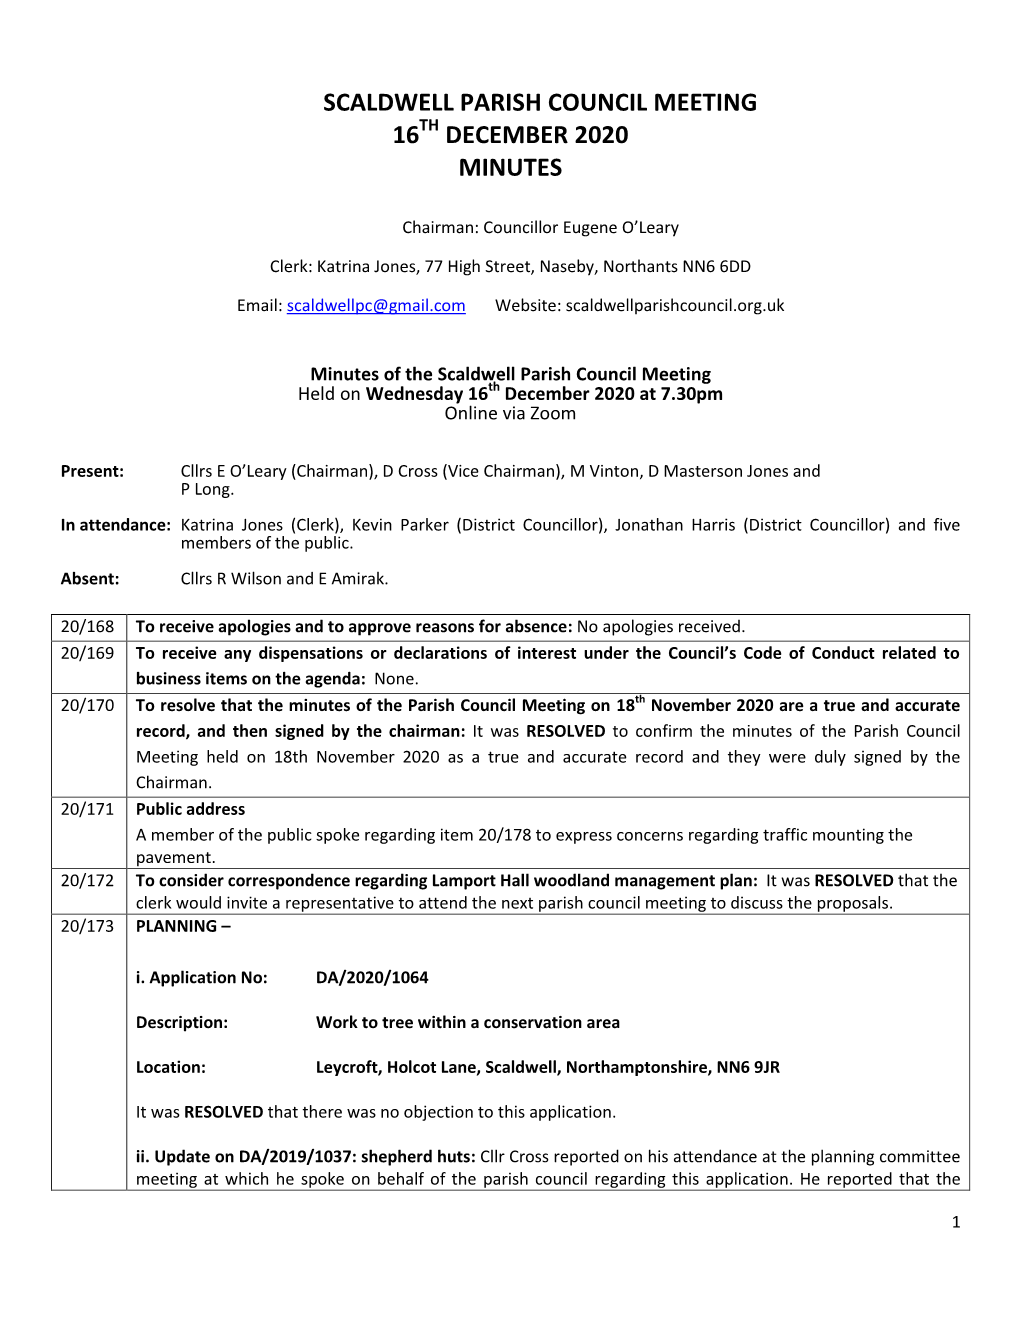 Scaldwell Parish Council Meeting 16 December 2020